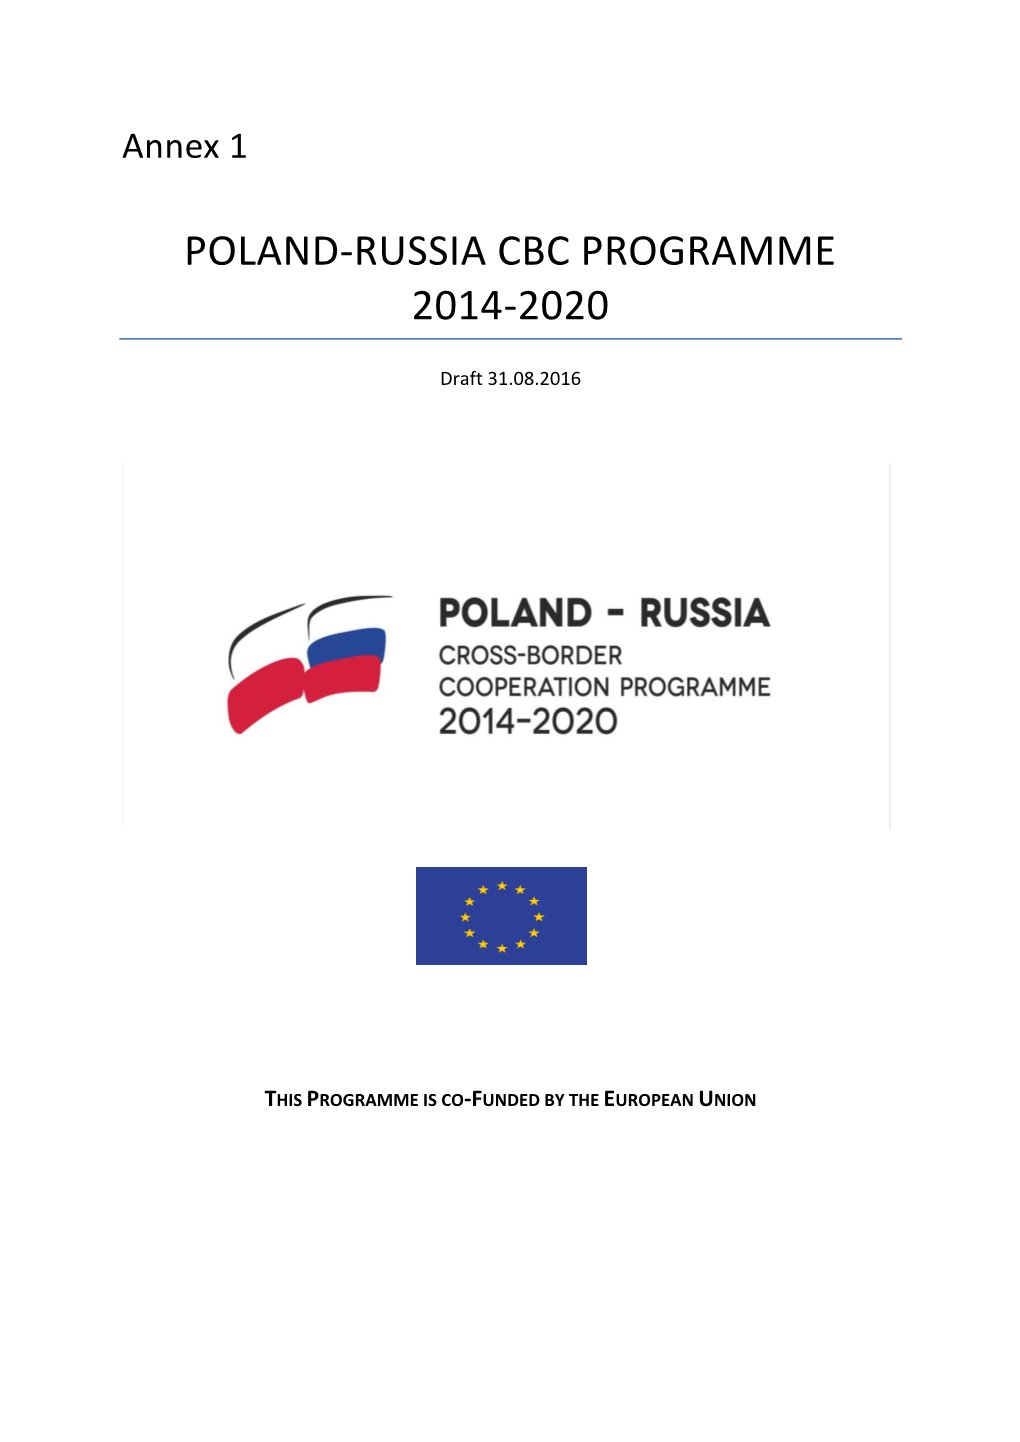 Poland-Russia Cbc Programme 2014-2020